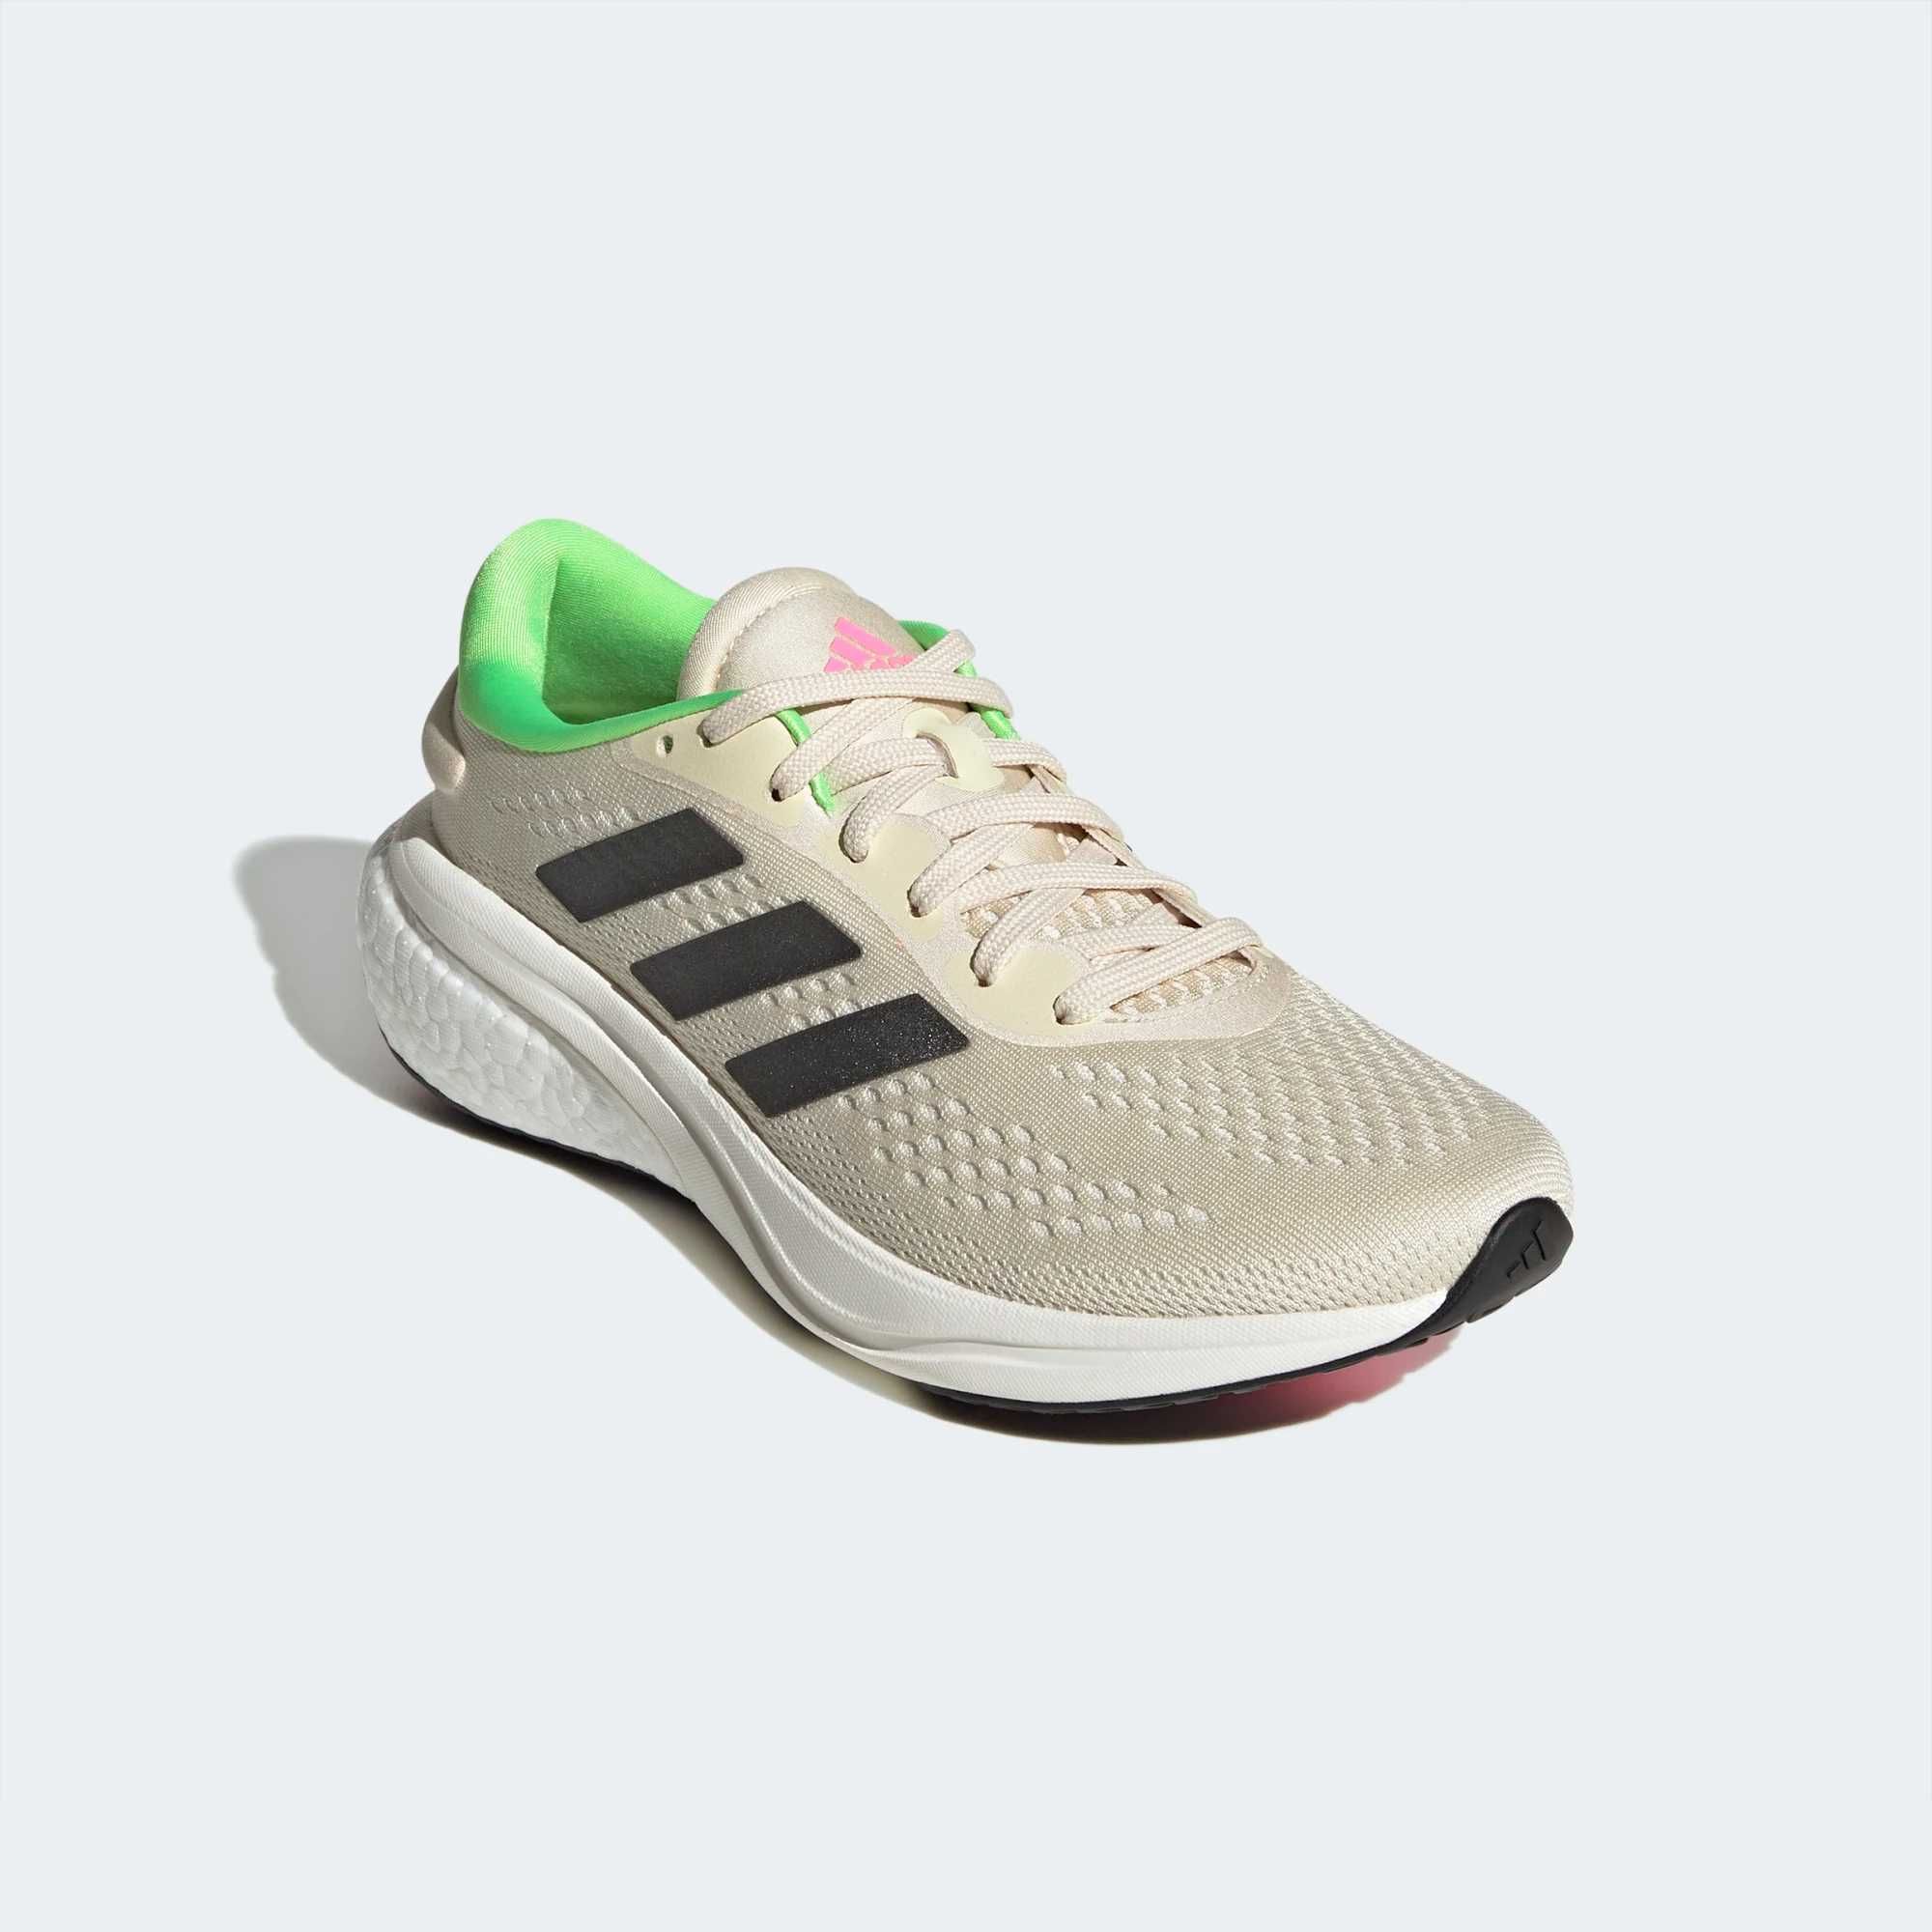 Supernova 2.0 Running Shoes Adidas (оригинал США)